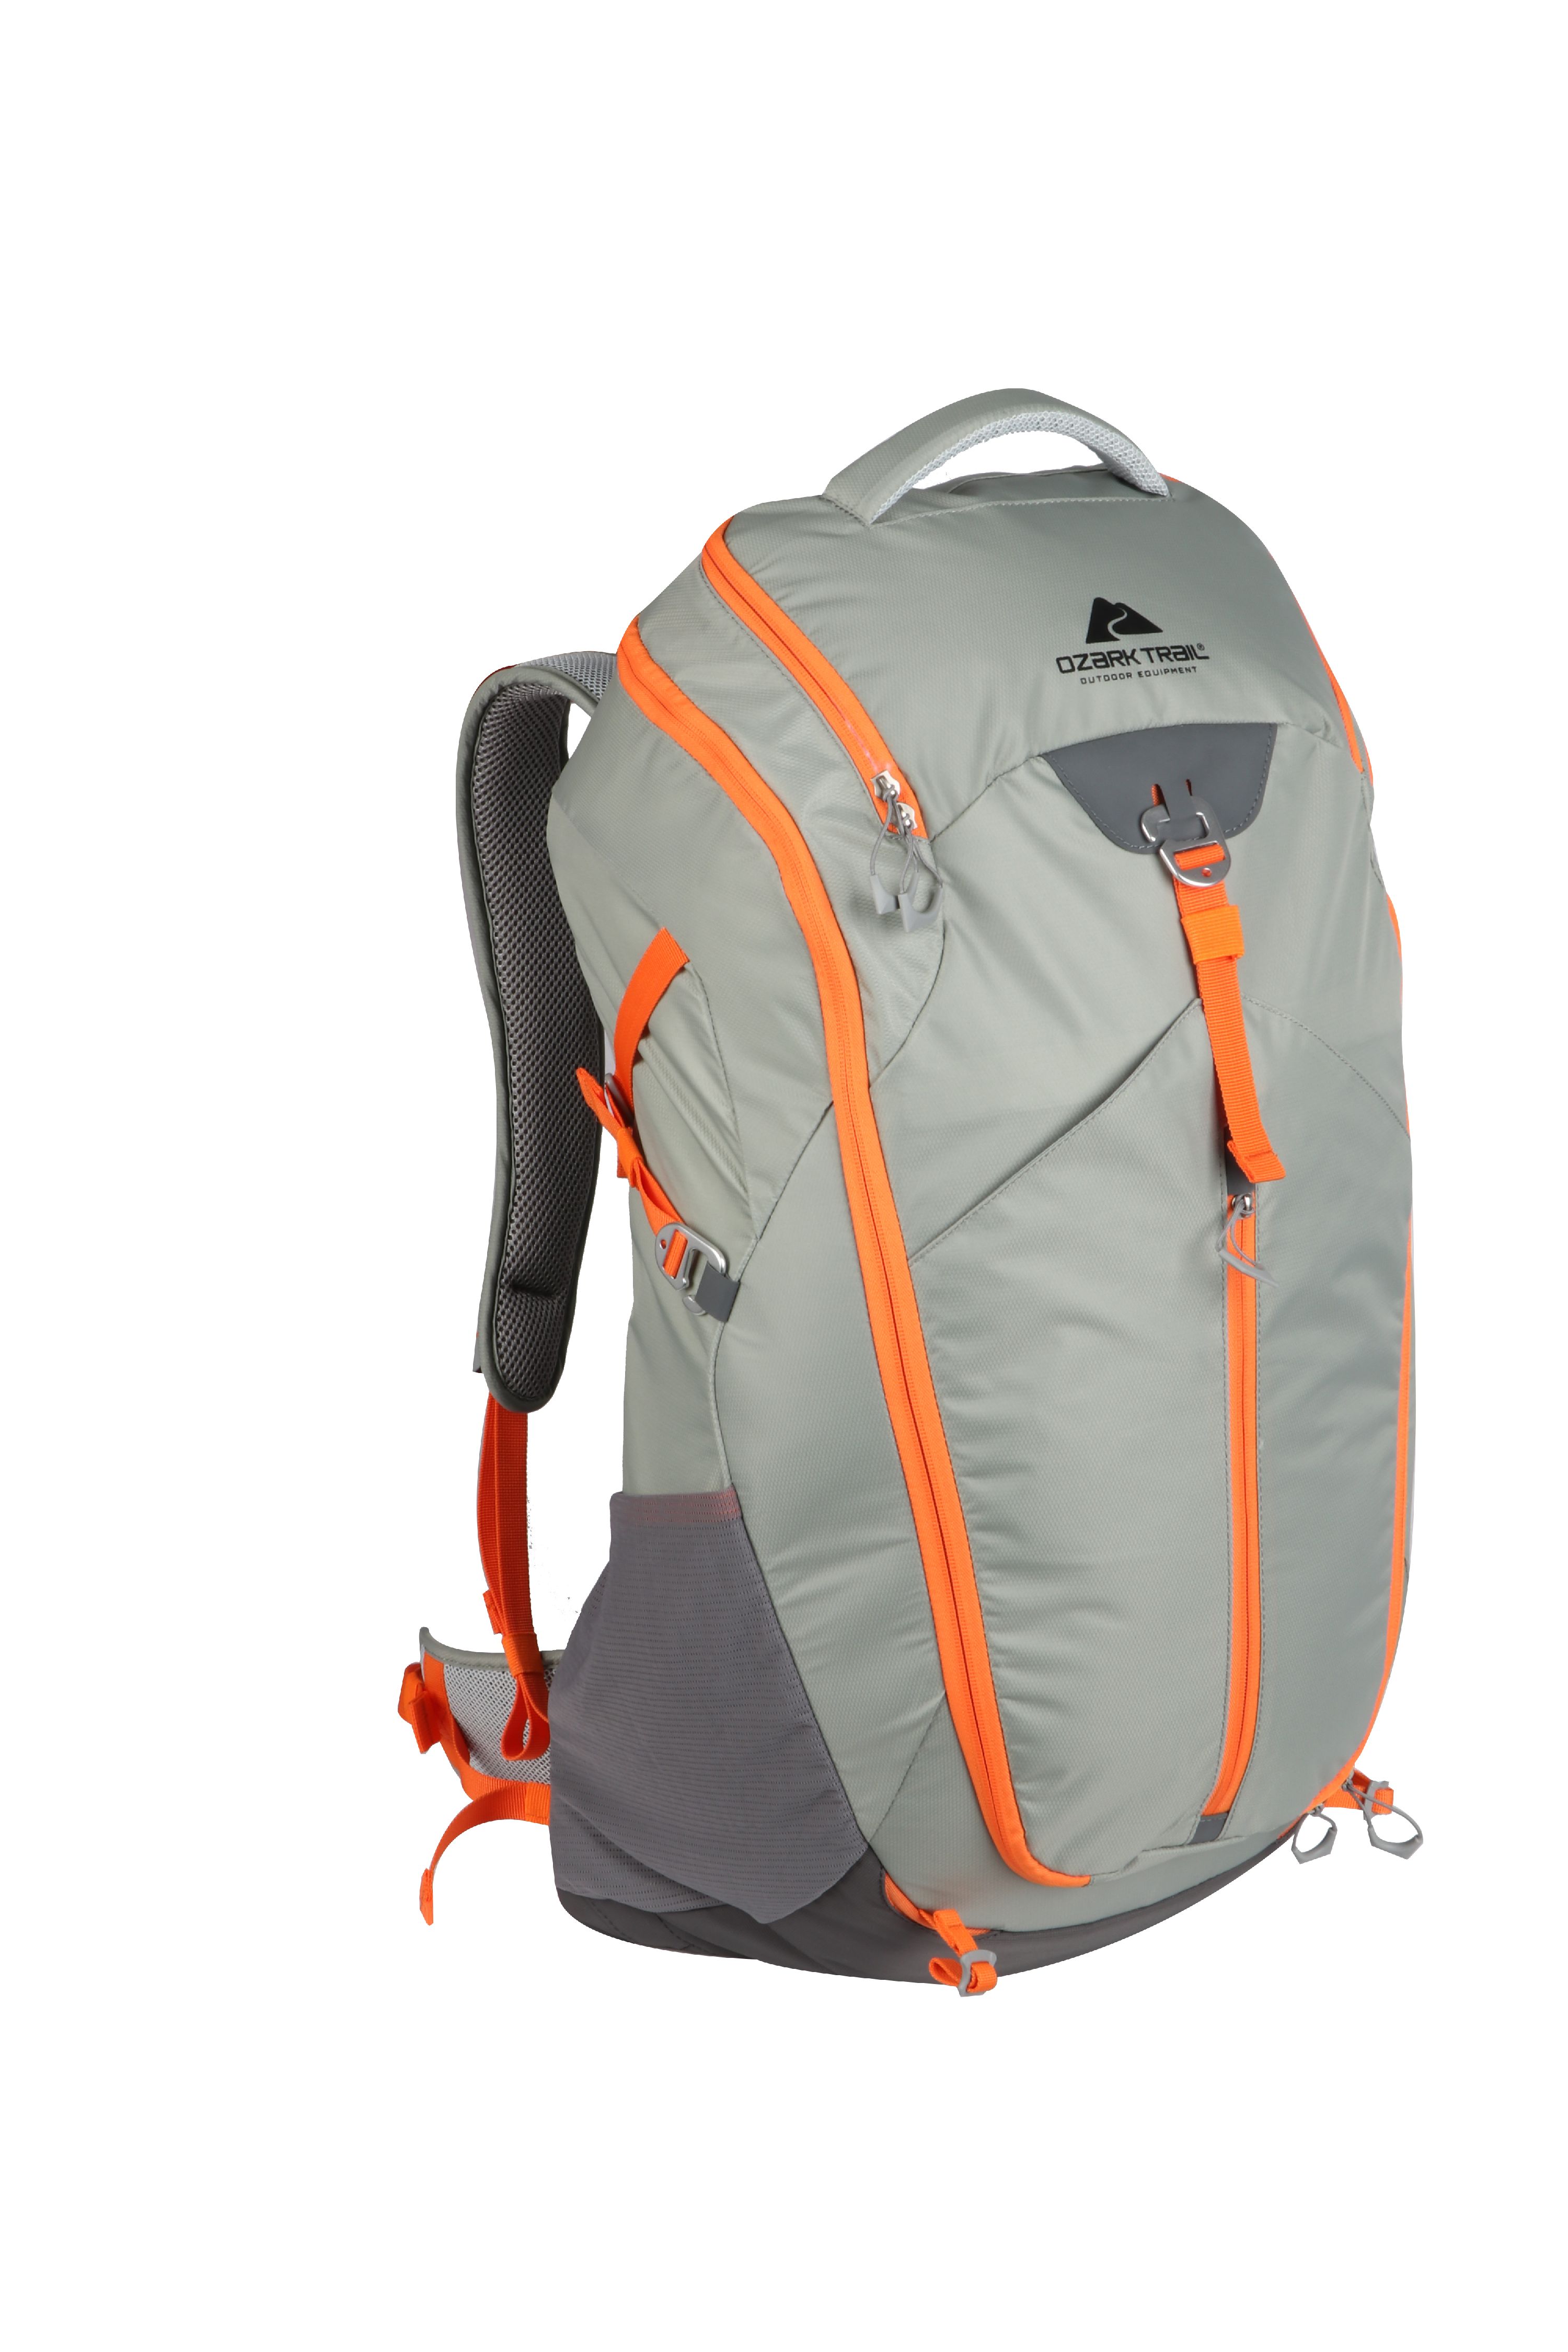 Ozark Trail 40l Backpack | lupon.gov.ph